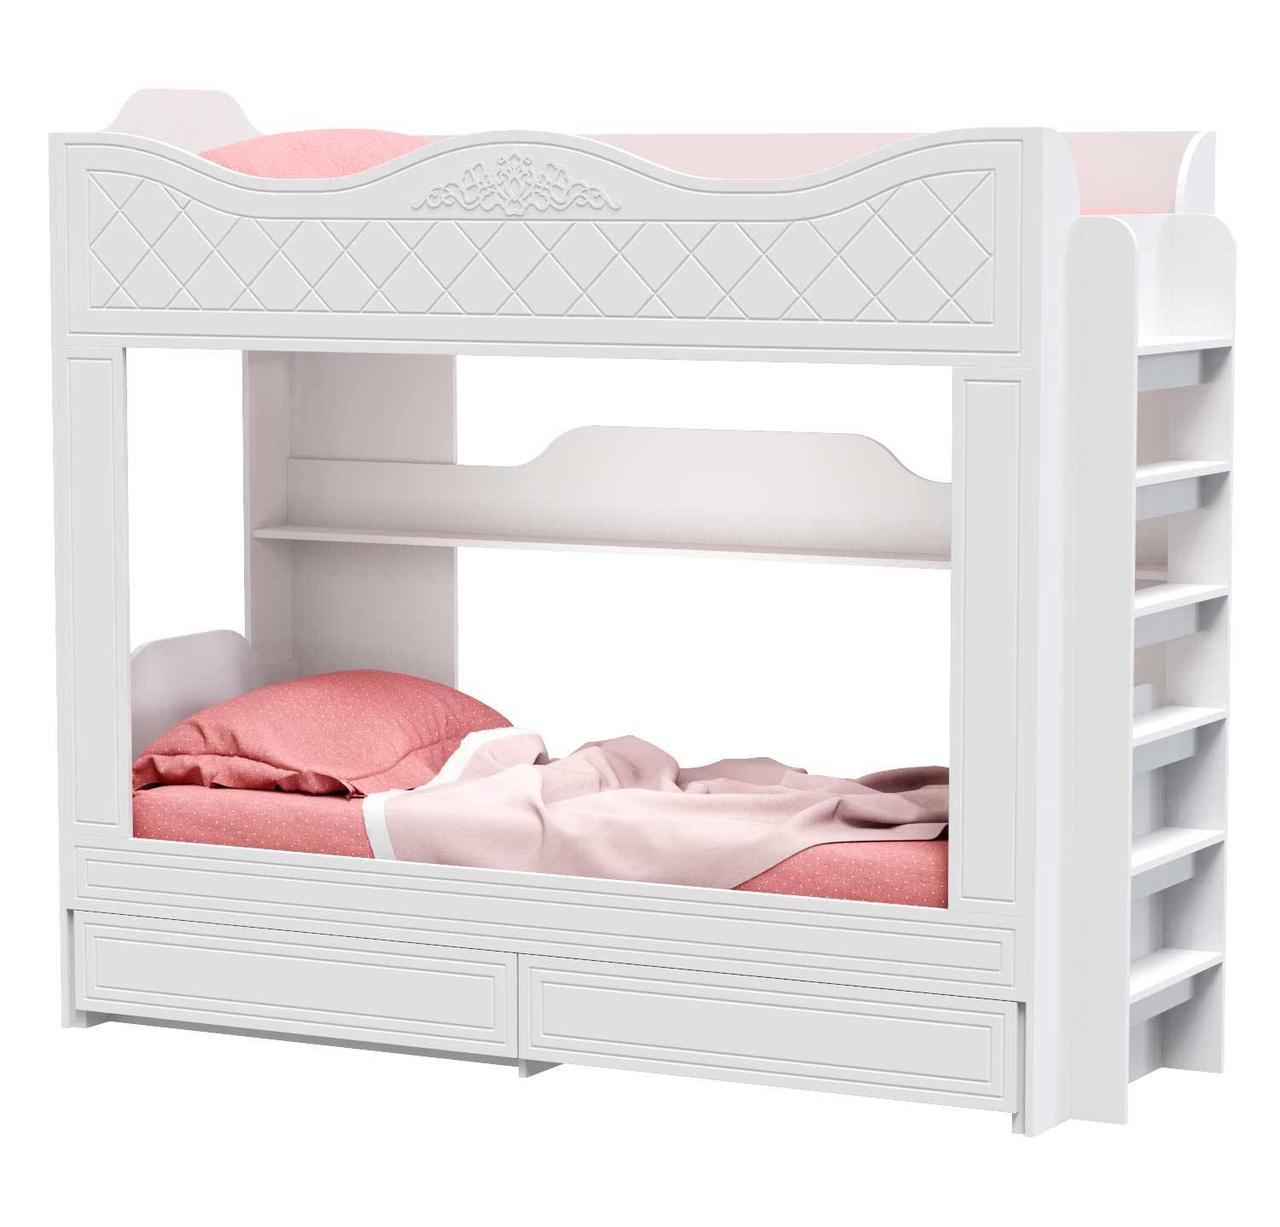 Двоярусне ліжко з шухлядами Amelie Art in Head, двоярусне біле ліжко з бортиками